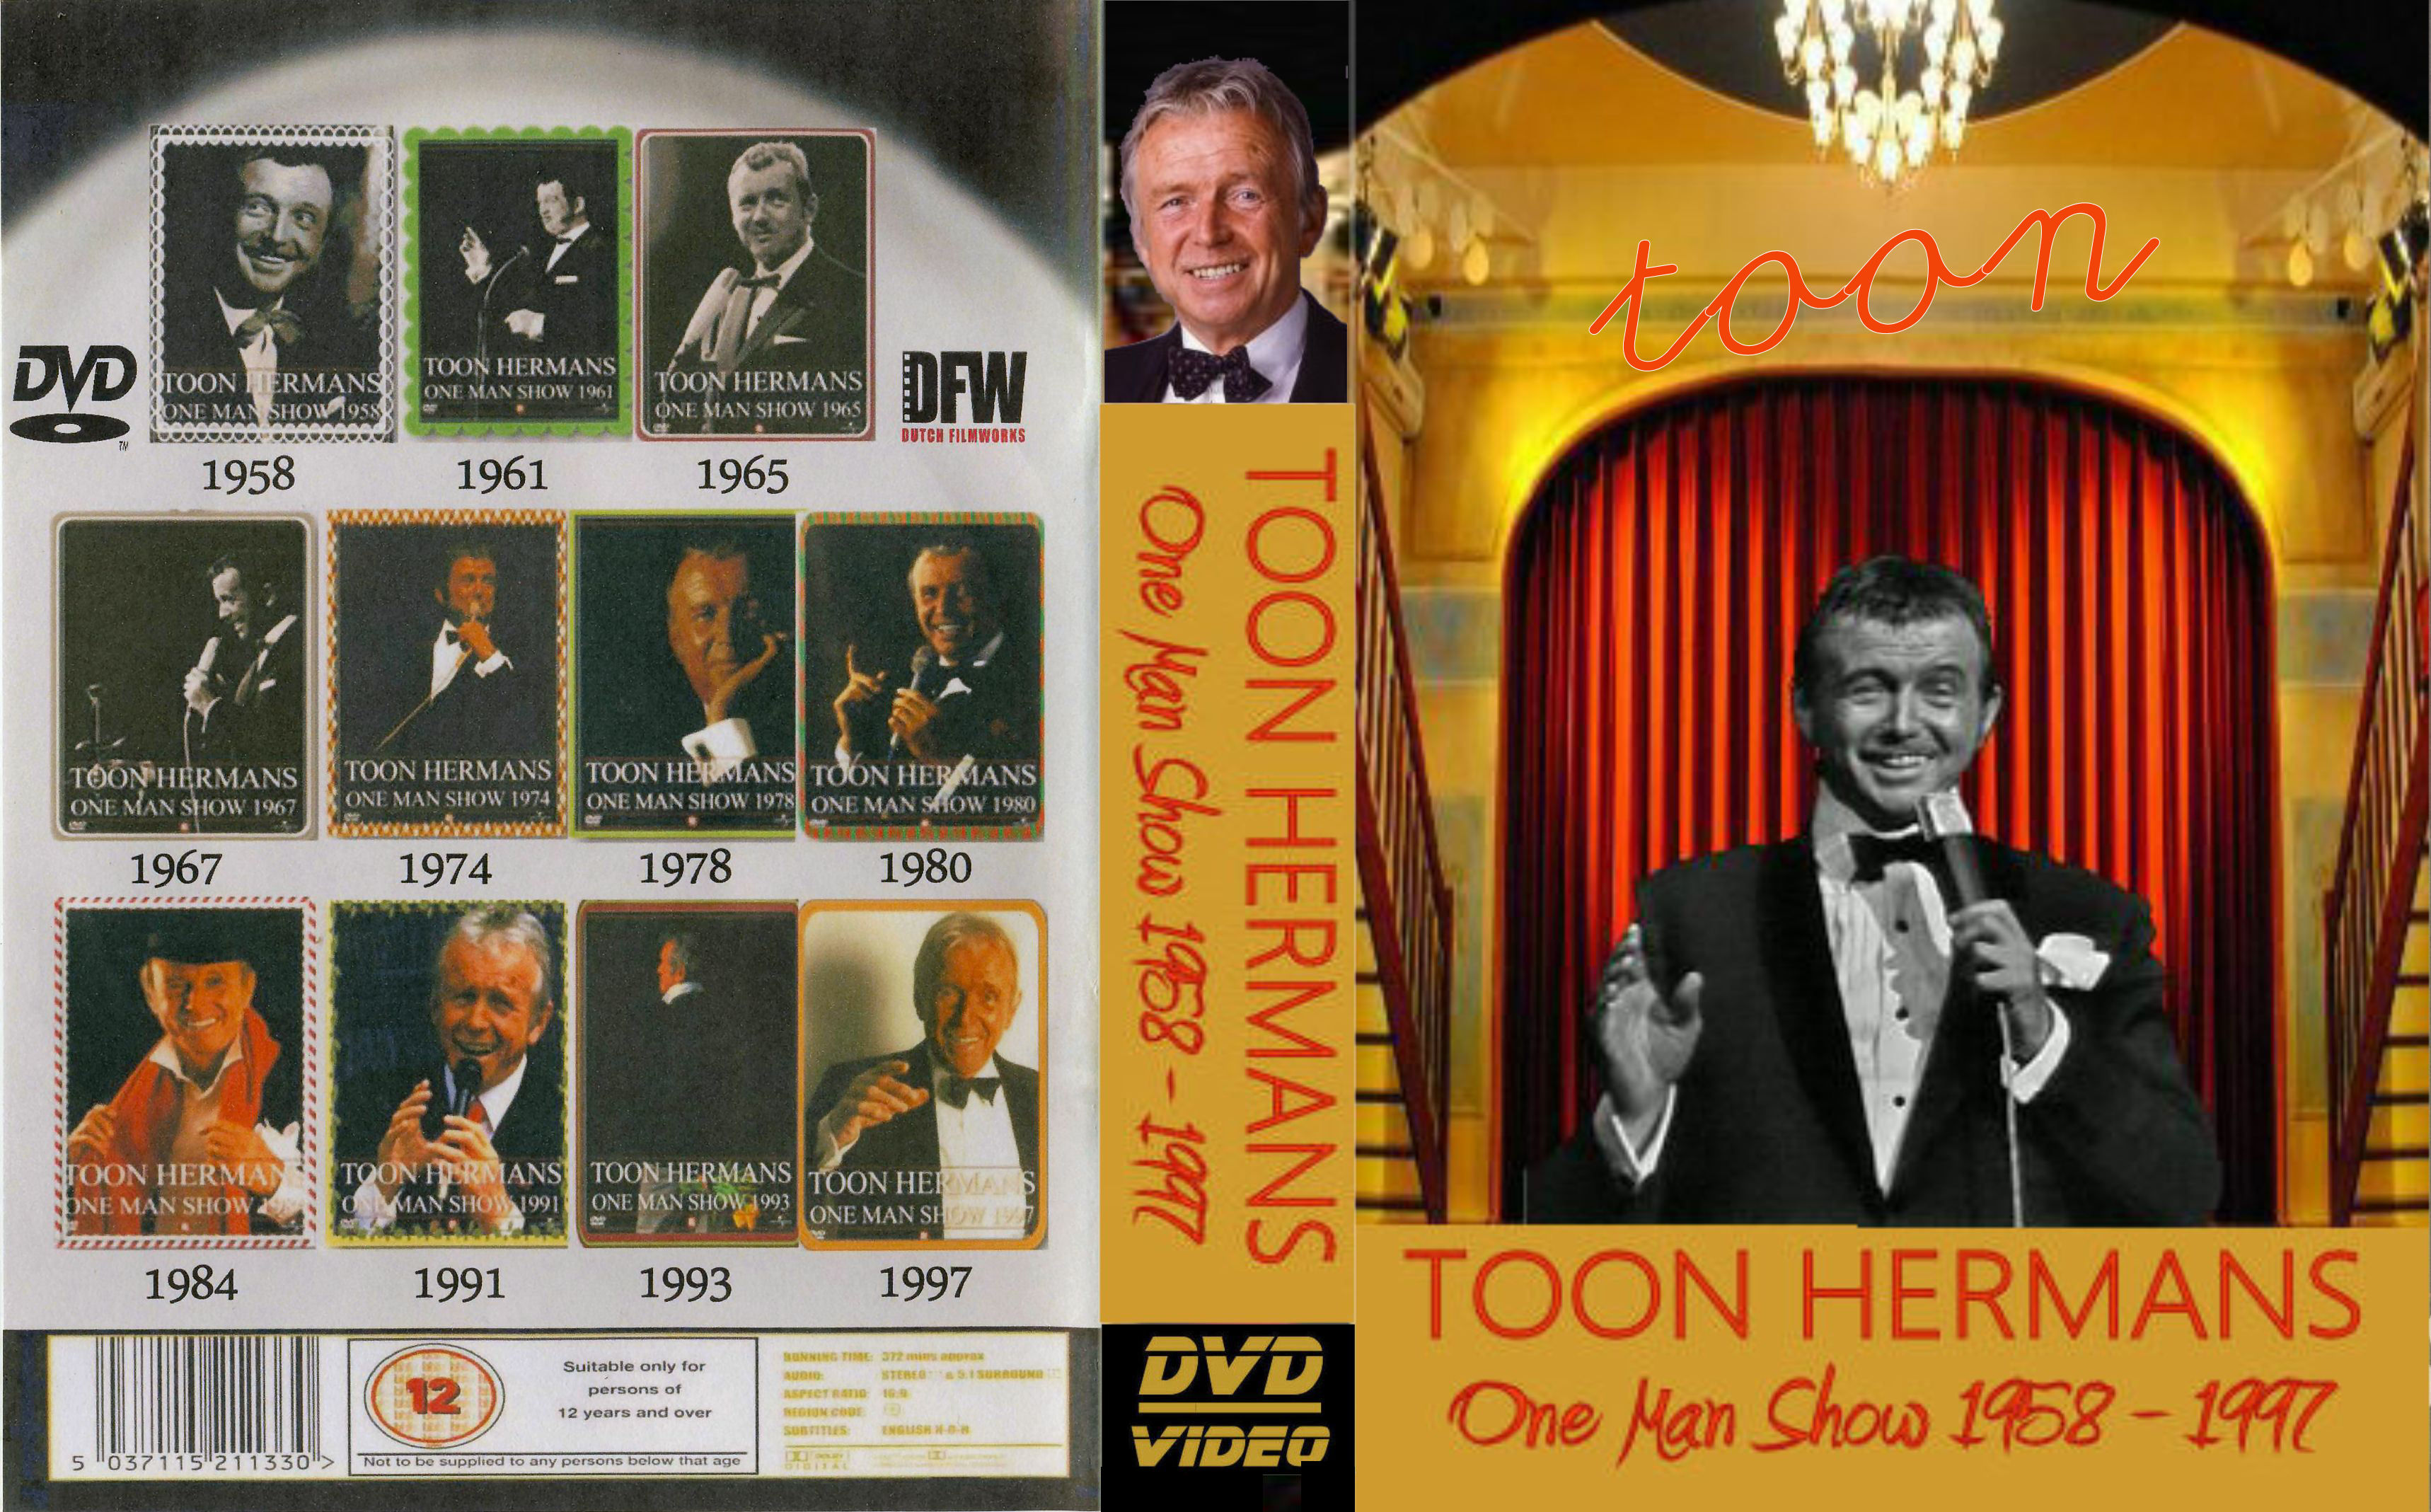 Toon Hermans One Man Show 1958 - 1997 - DvD 6 (1978)